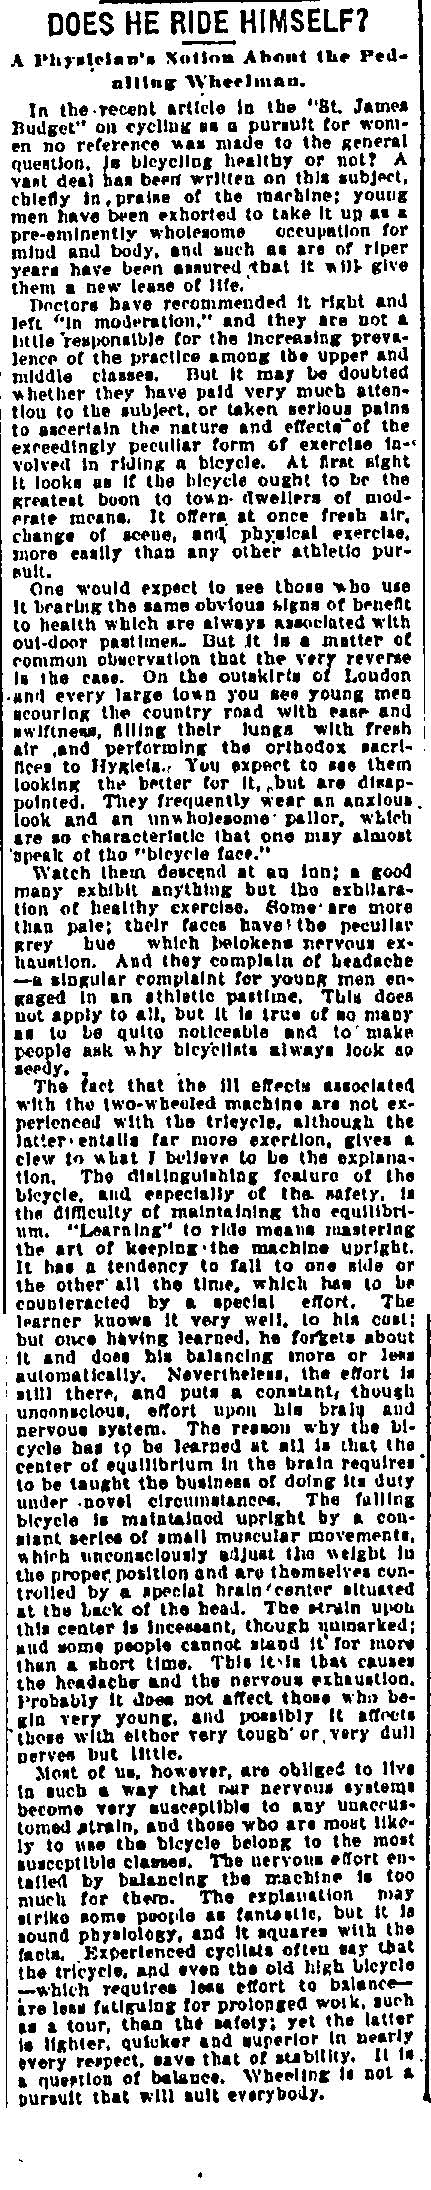 Minneapolis Journal, July 6, 1895.